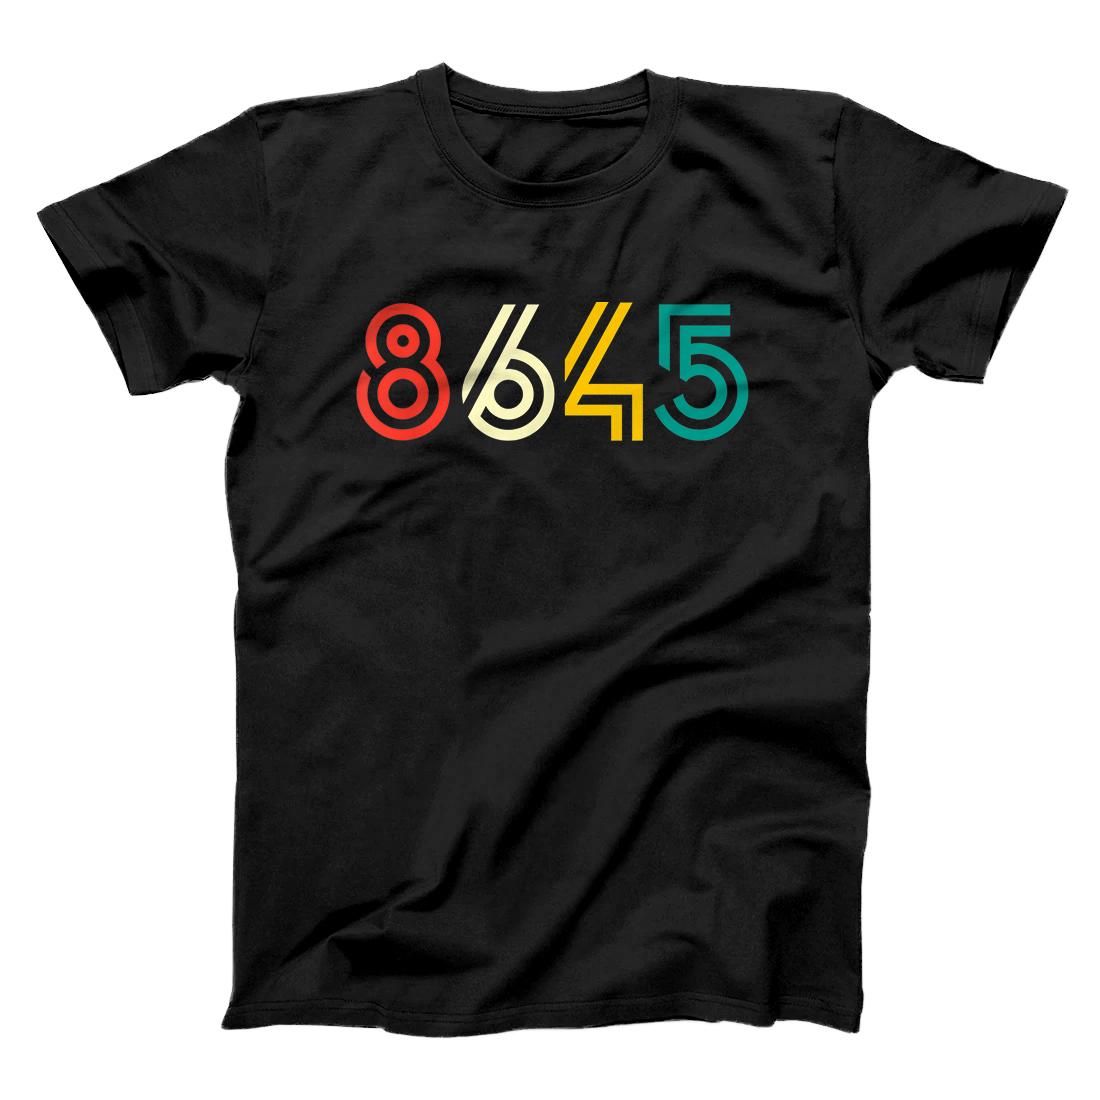 Personalized 8645 shirt retro anti trump cool T-Shirt